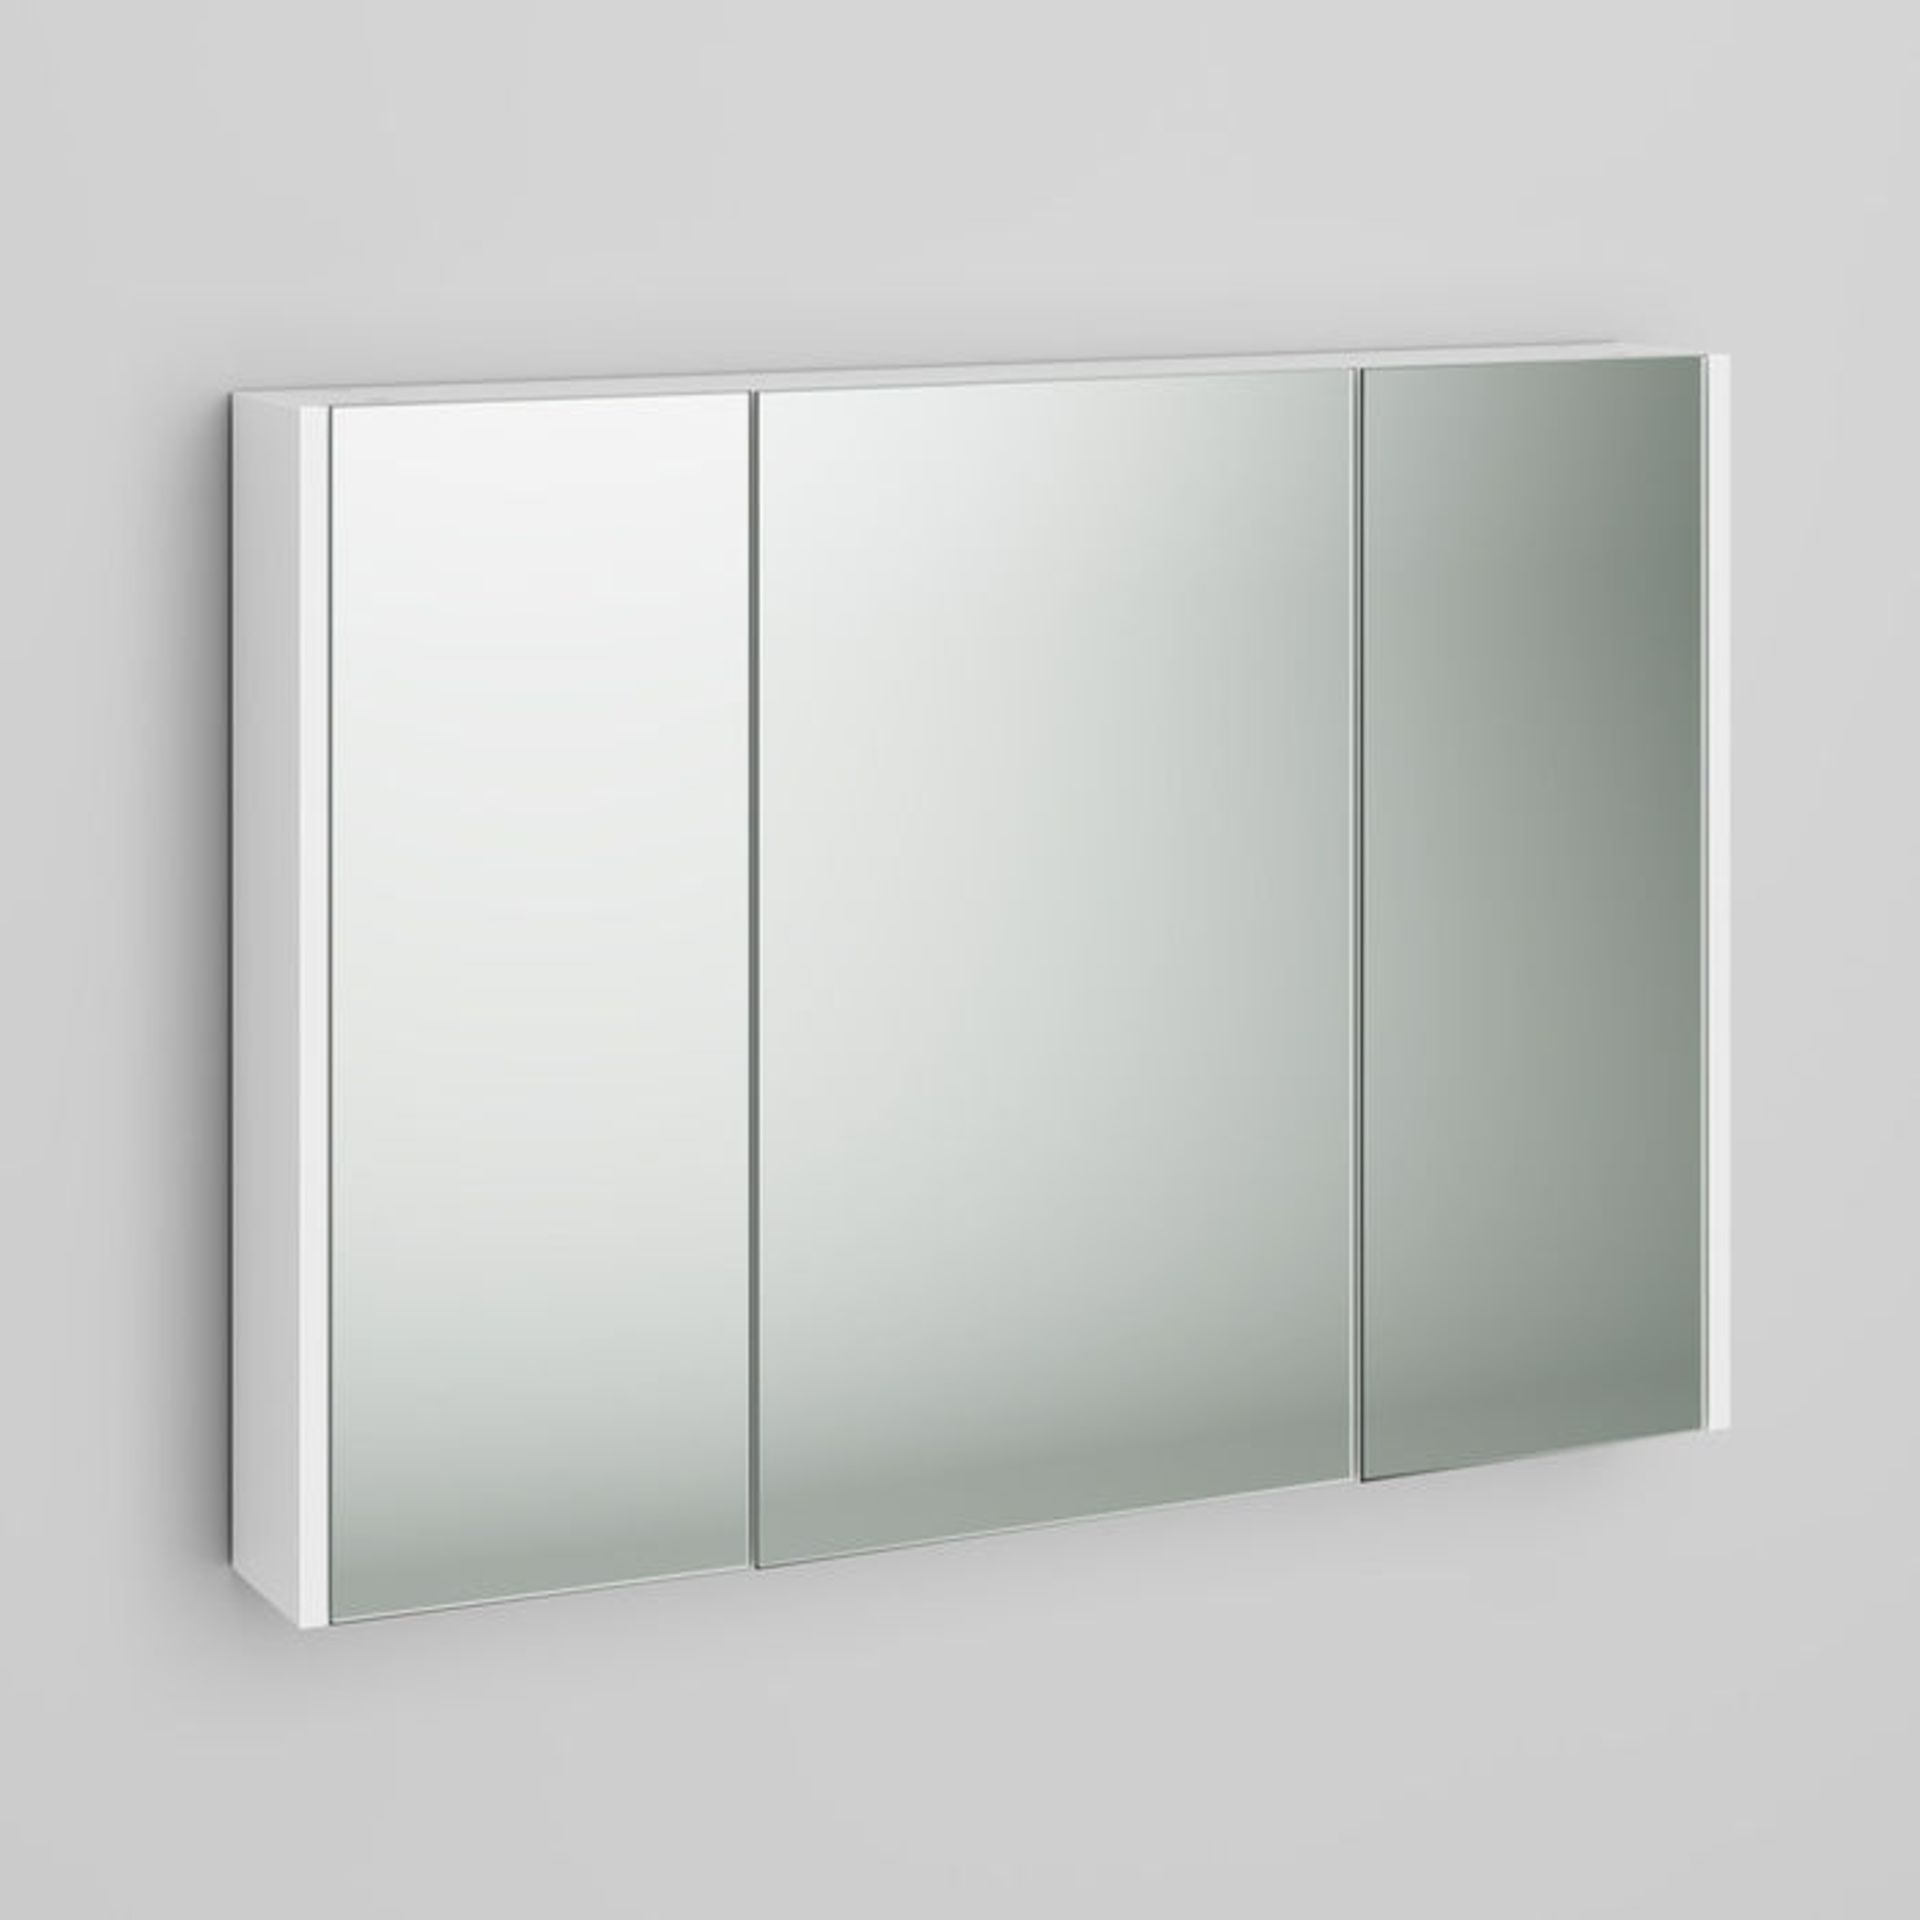 (TA207) 900mm Gloss White Triple Door Mirror Cabinet. RRP £299.99. Sleek contemporary design - Image 3 of 4